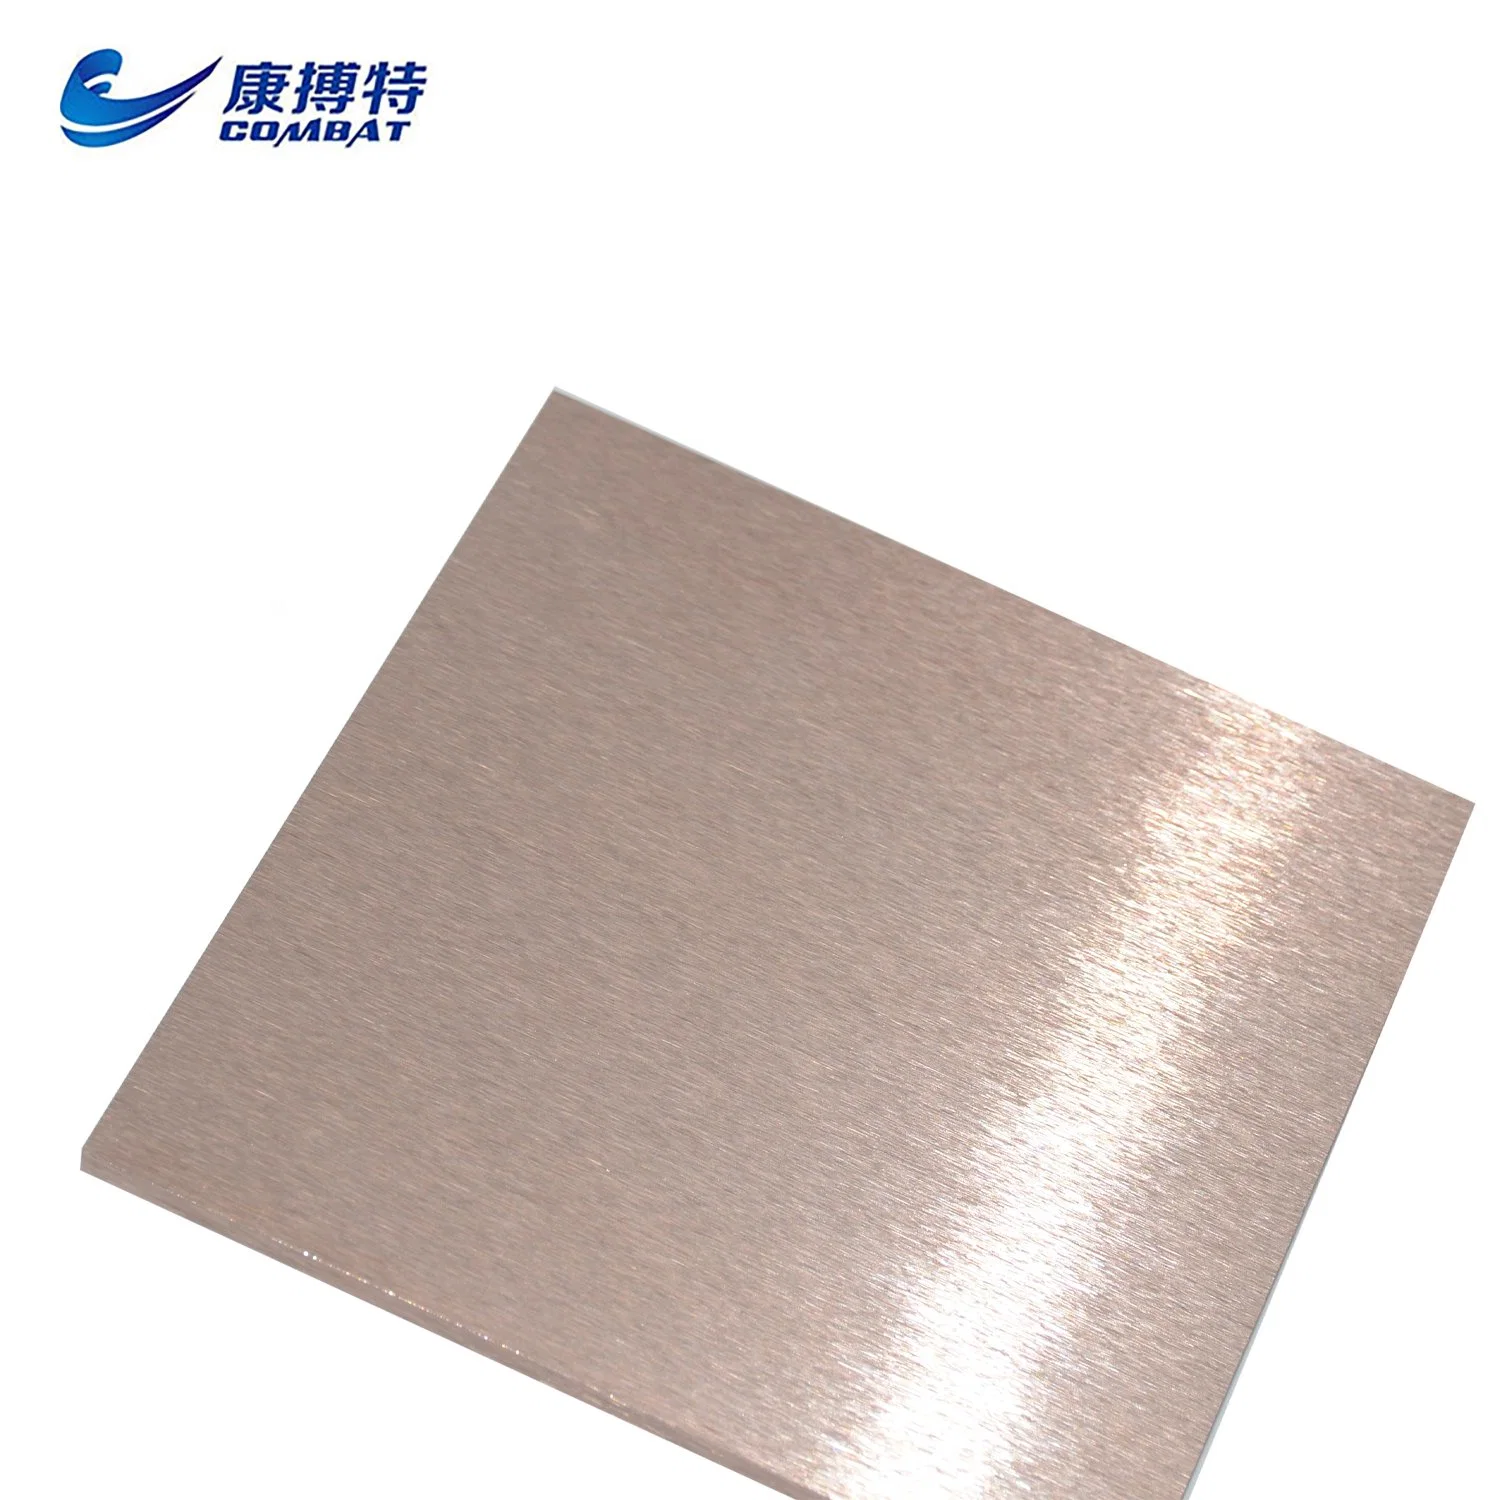 Luoyang Combat ASTM W/Cu 80/20 Plate Best Tungsten Copper Alloy Price Factory W75cu25